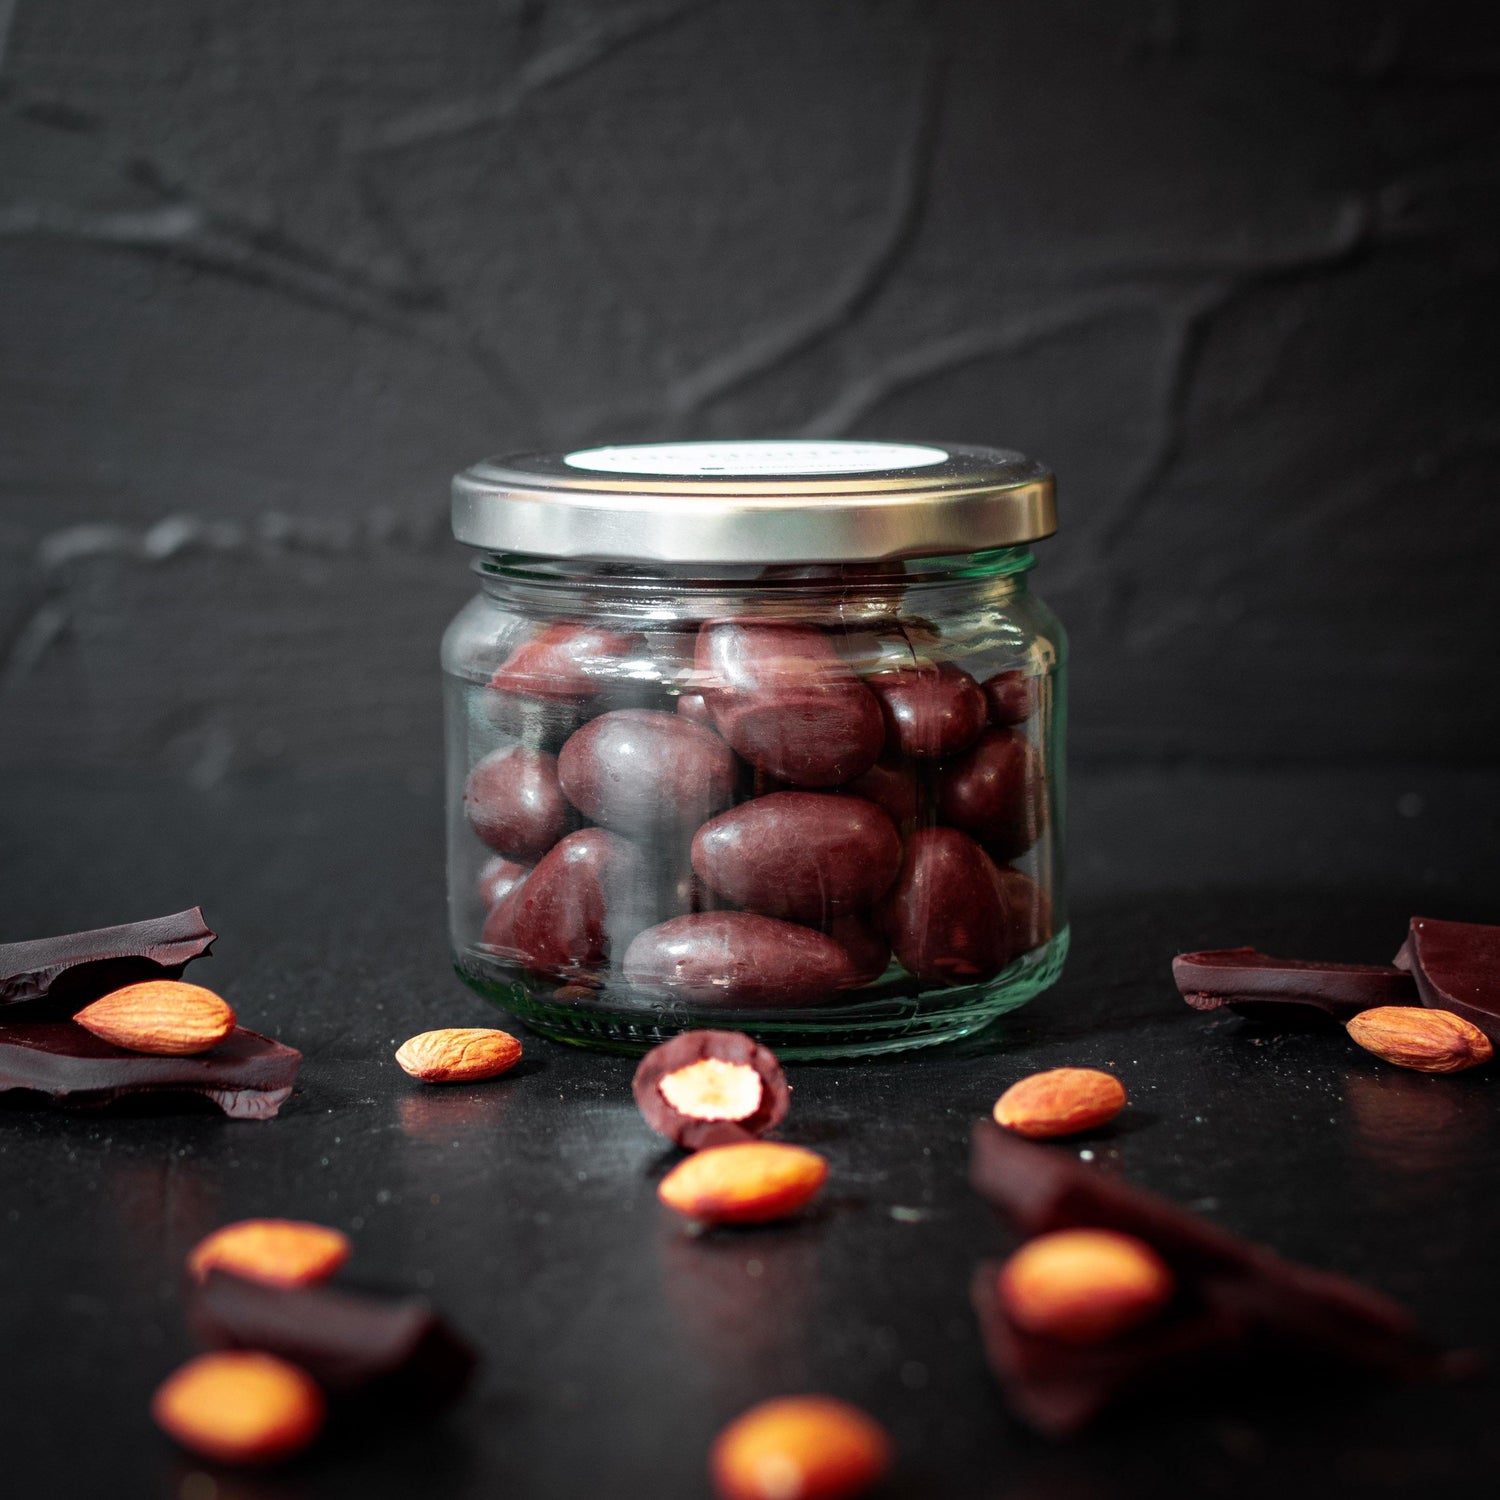 Belgian Dark Chocolate Almonds - The Nuttery